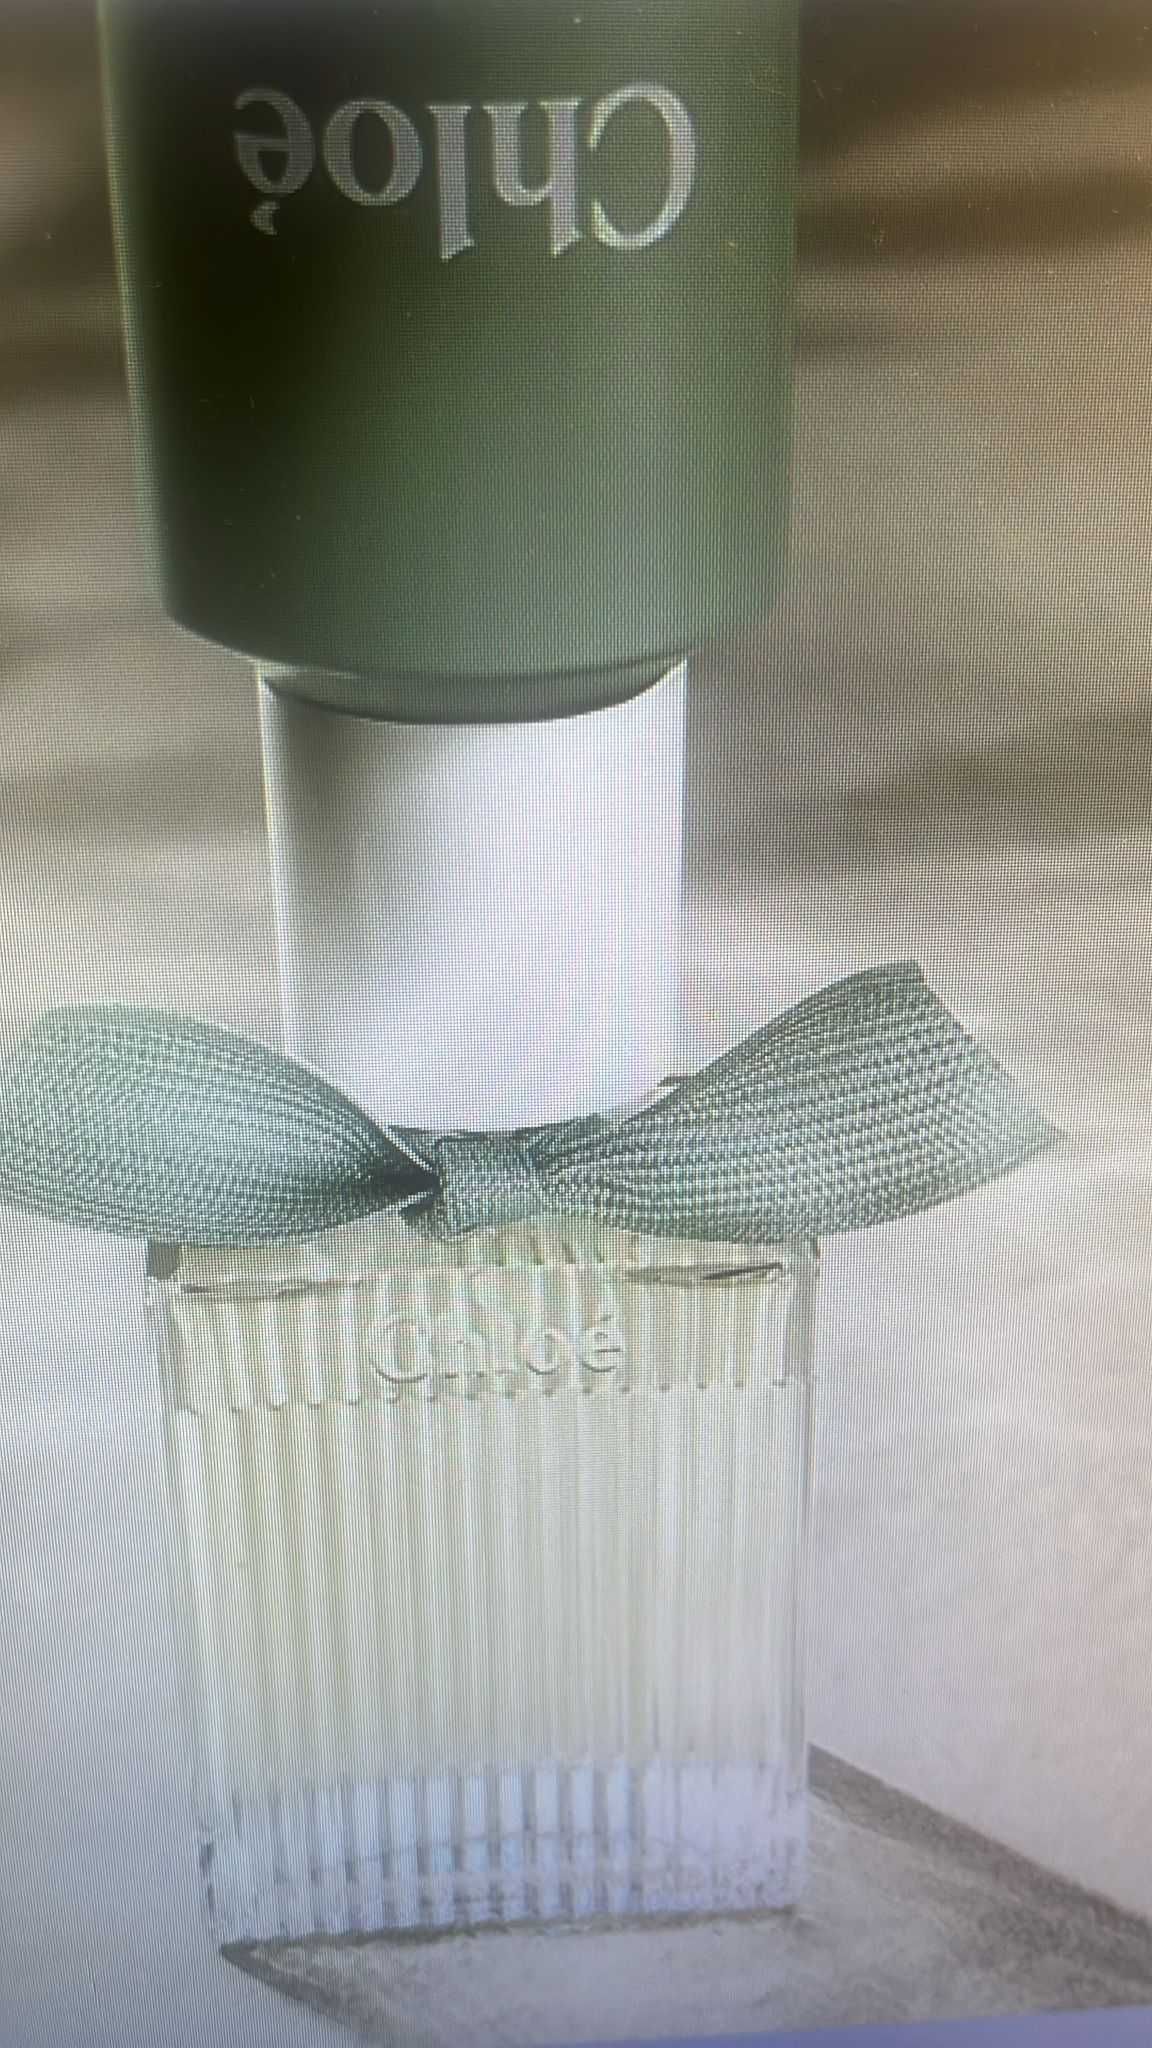 Perfumy Chloe Naturelle, zapas 150 ml, oryginalne